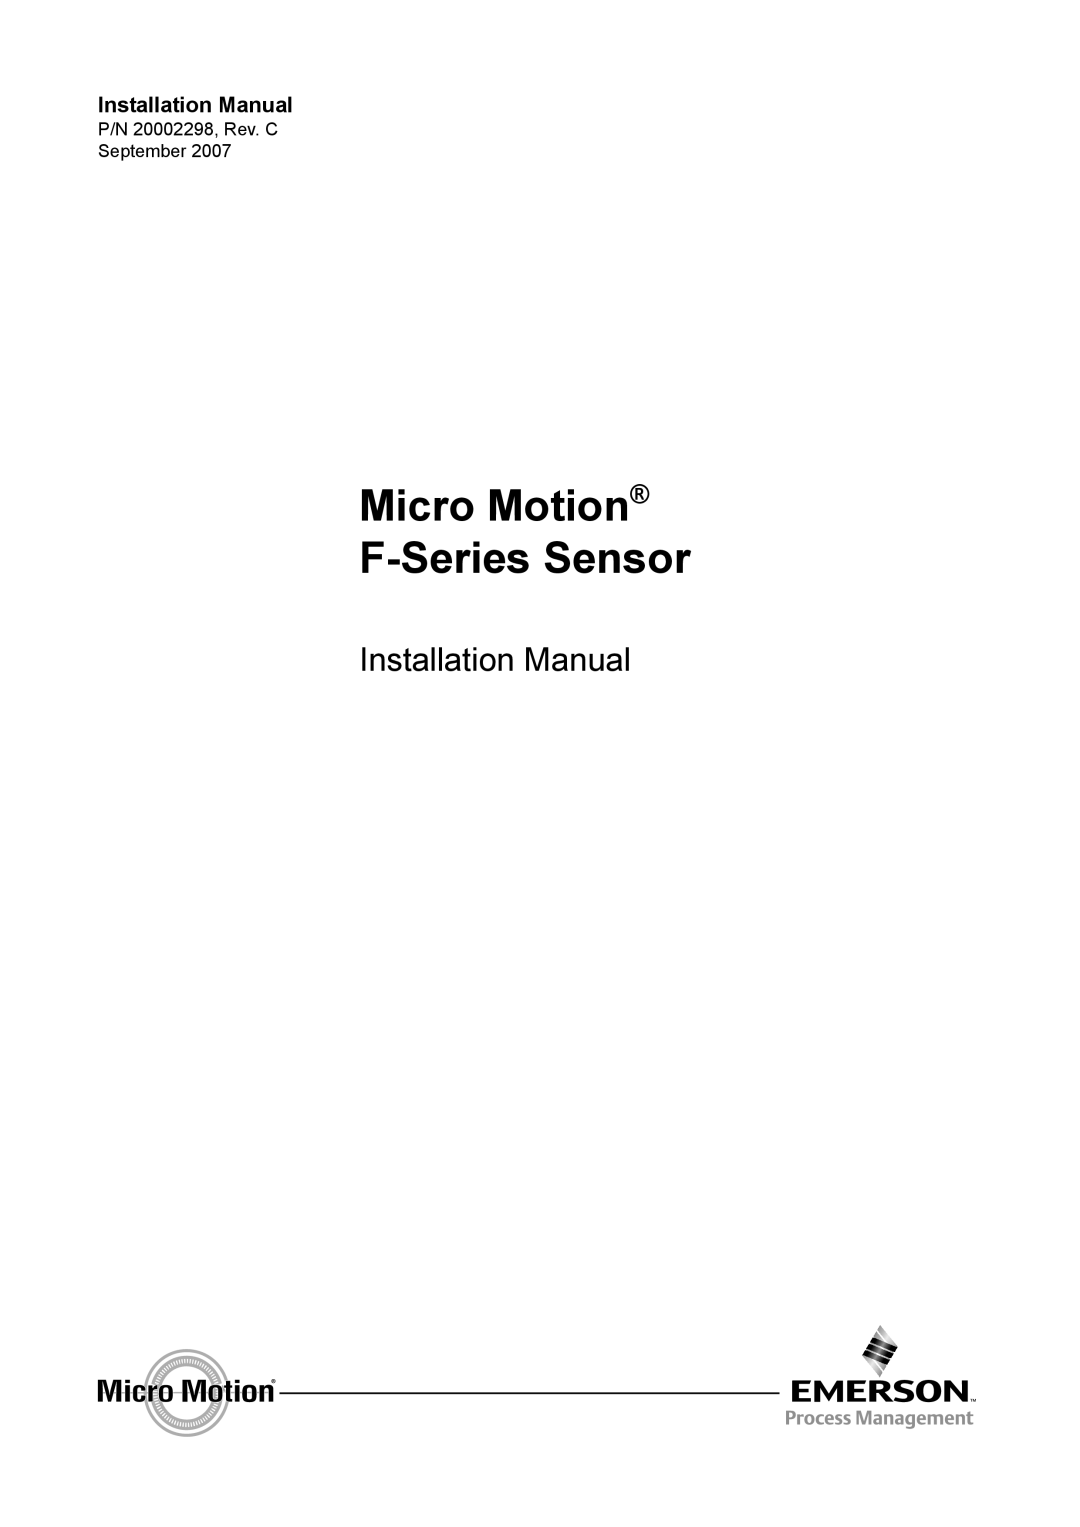 Emerson F-SERIES SENSOR installation manual Micro Motion F-SeriesSensor, Installation Manual 